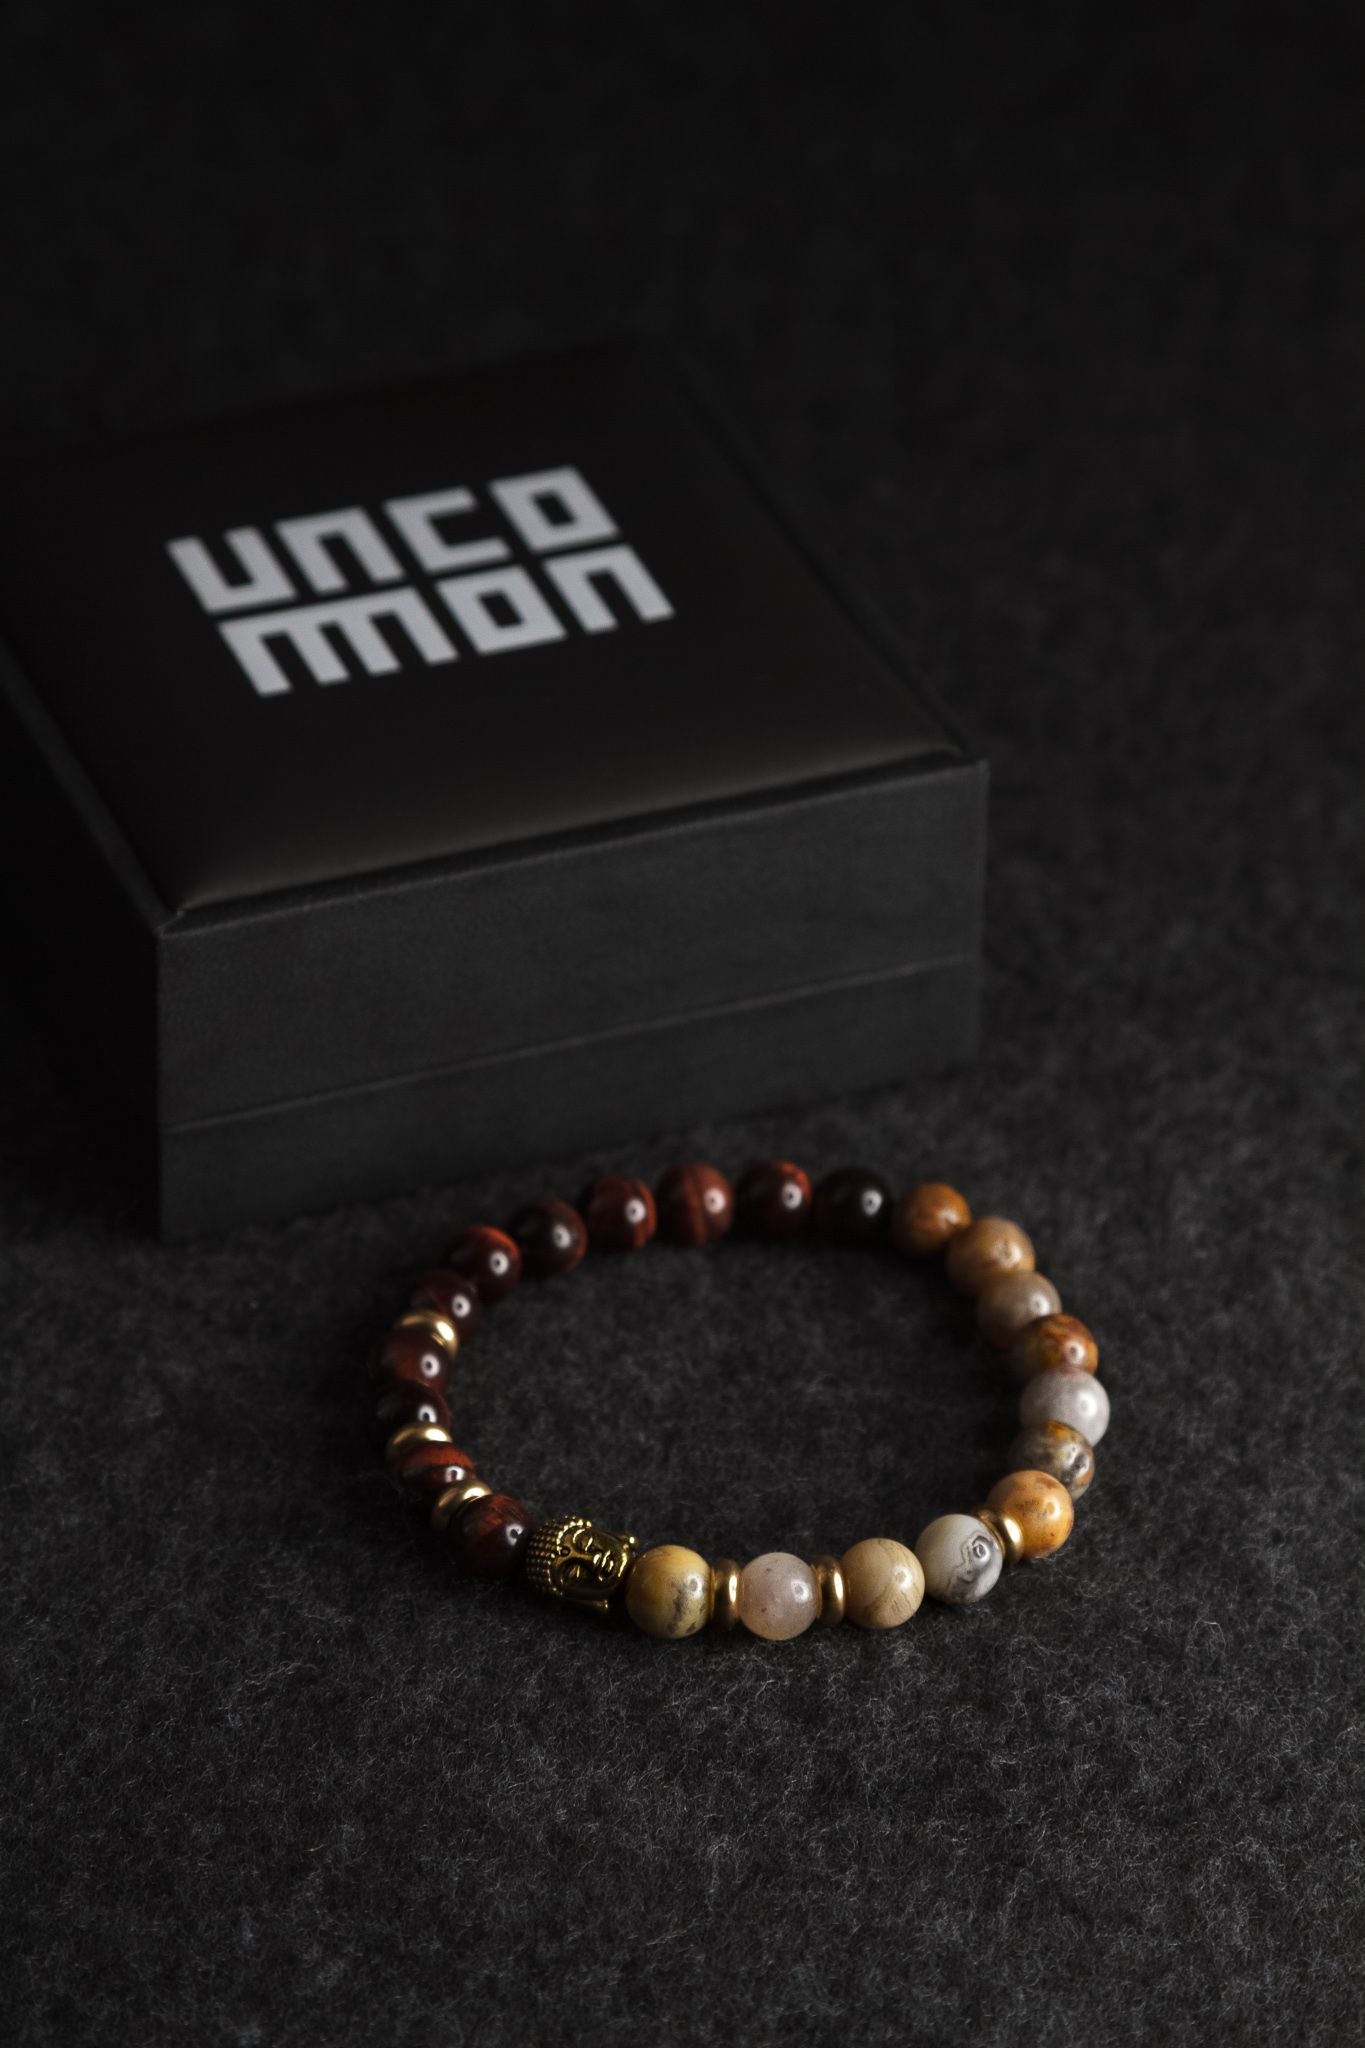 UNCOMMON Men's Beads Bracelet One Gold Buddha Head Charm Tiger-Eye Bea